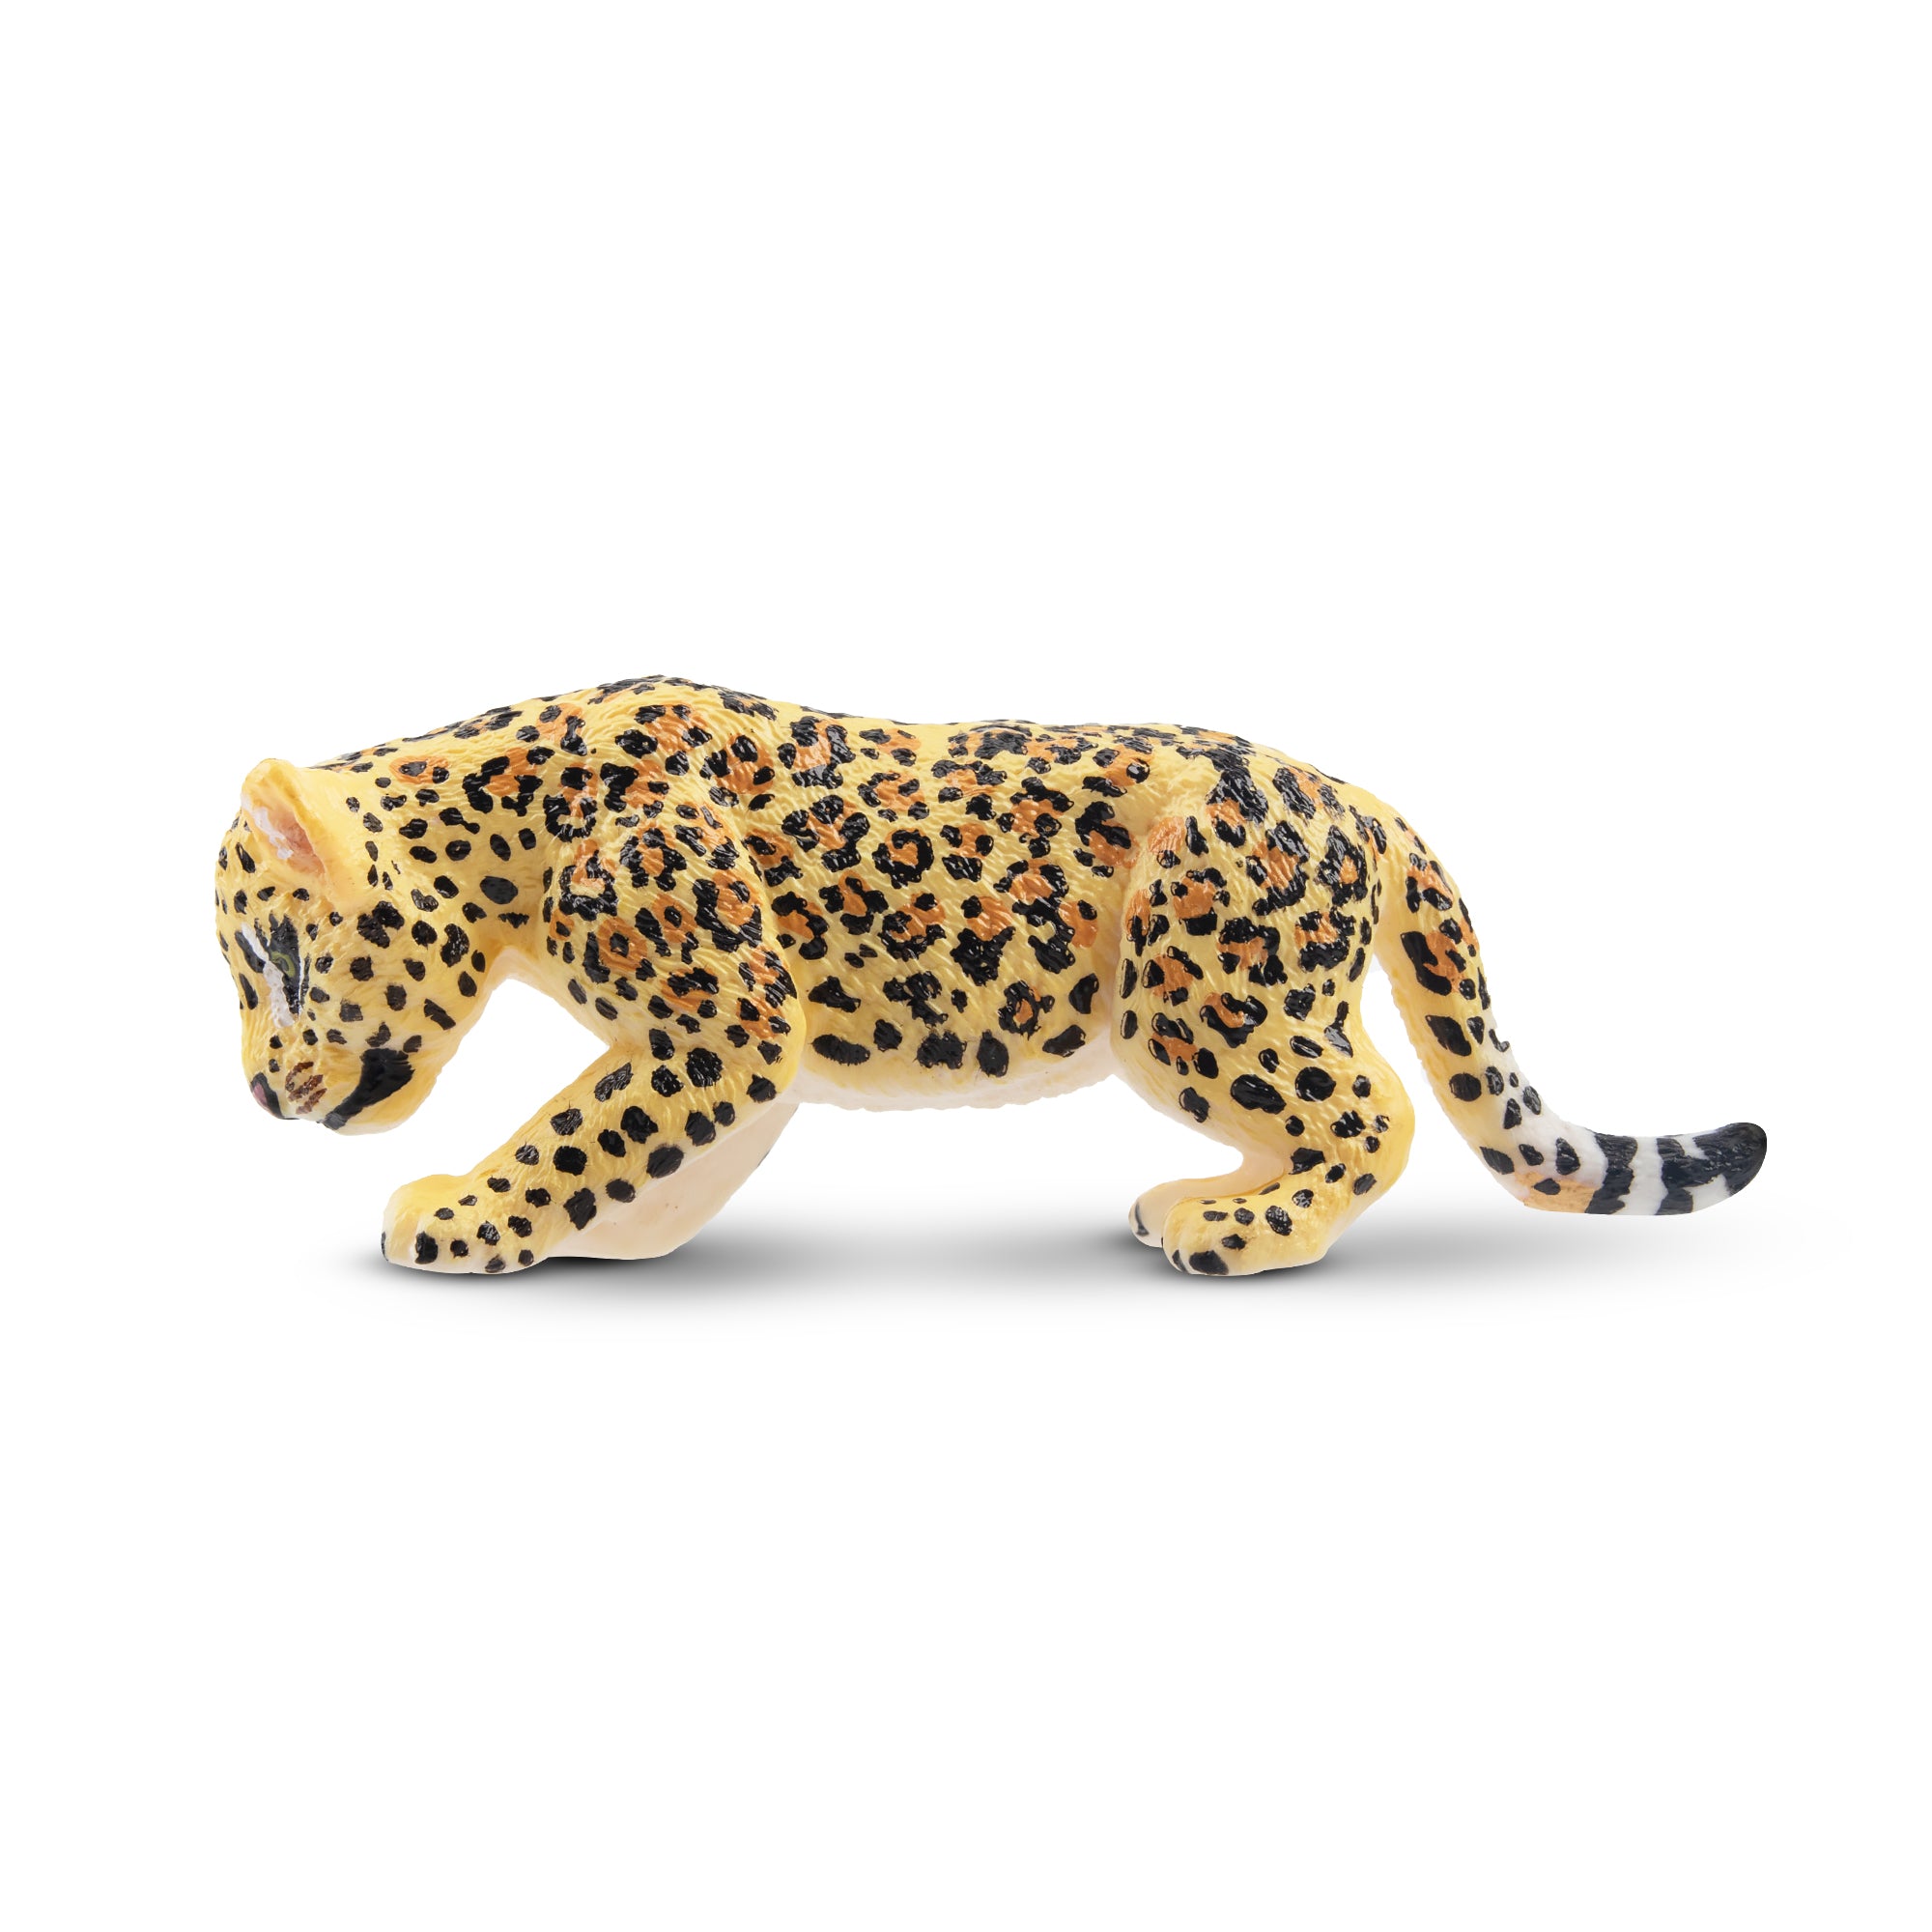 Toymany Standing Leopard Cub Figurine Toy-2